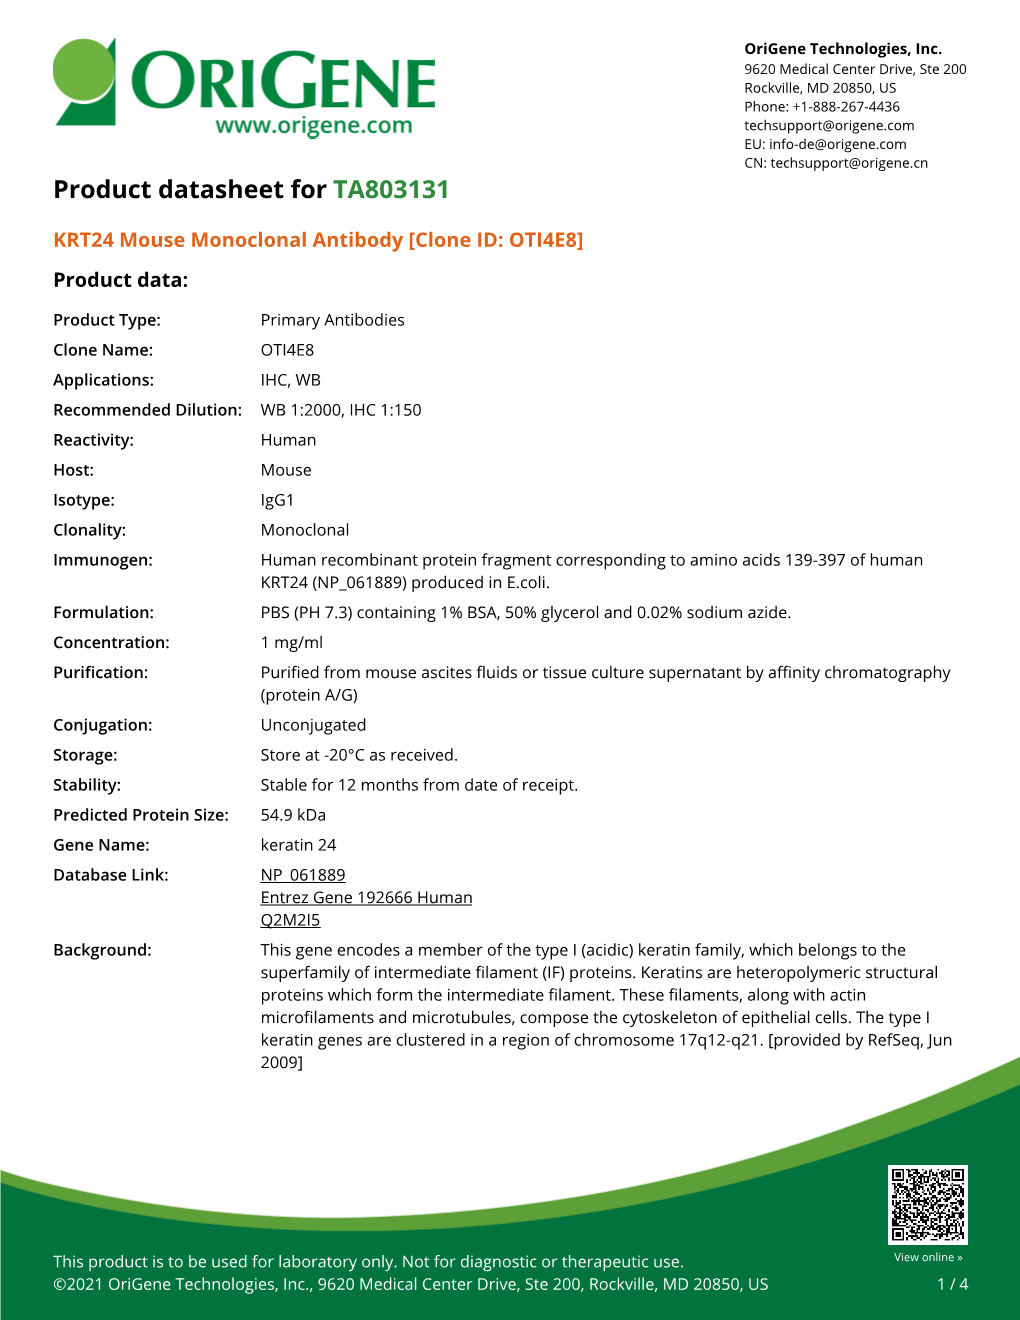 KRT24 Mouse Monoclonal Antibody [Clone ID: OTI4E8] Product Data